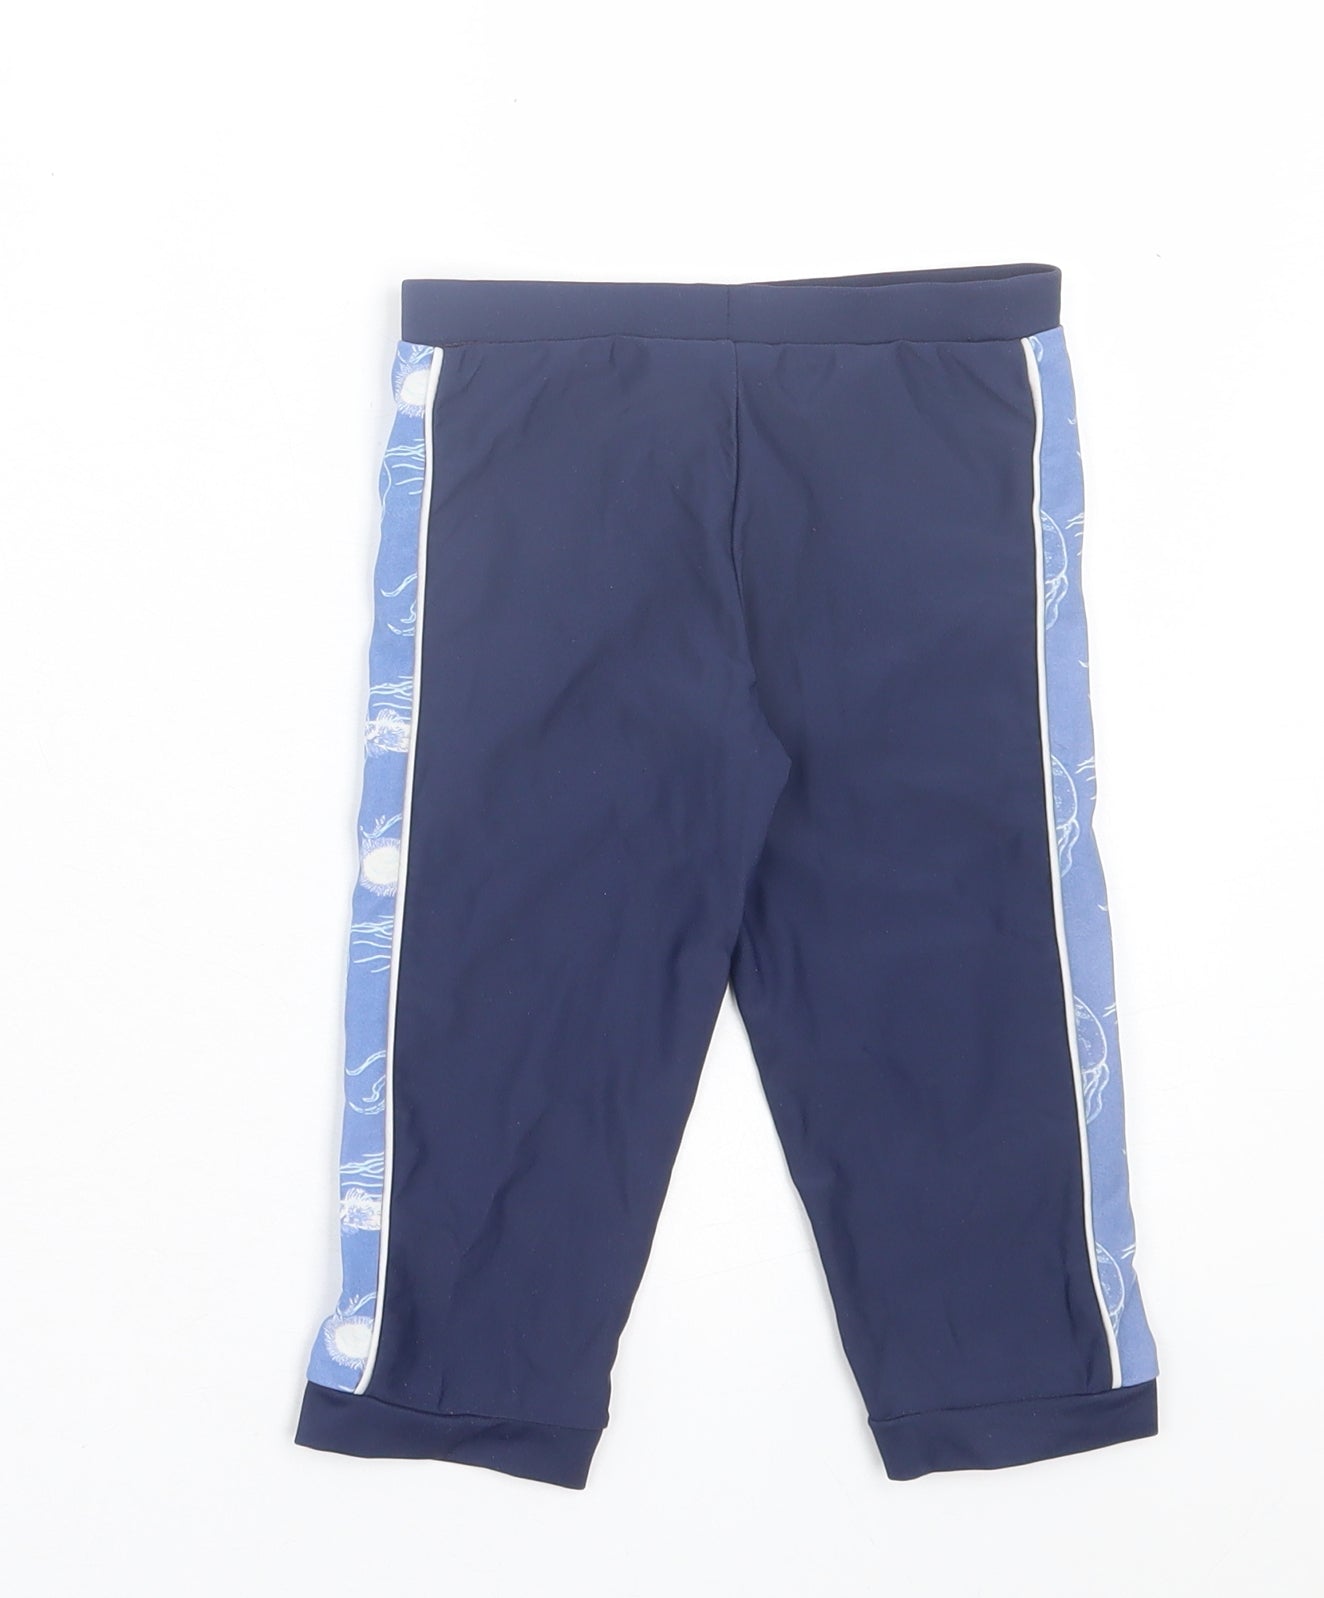 Trespass Boys Blue Polyester Capri Trousers Size 2-3 Years Regular Pullover - Swim Bottoms